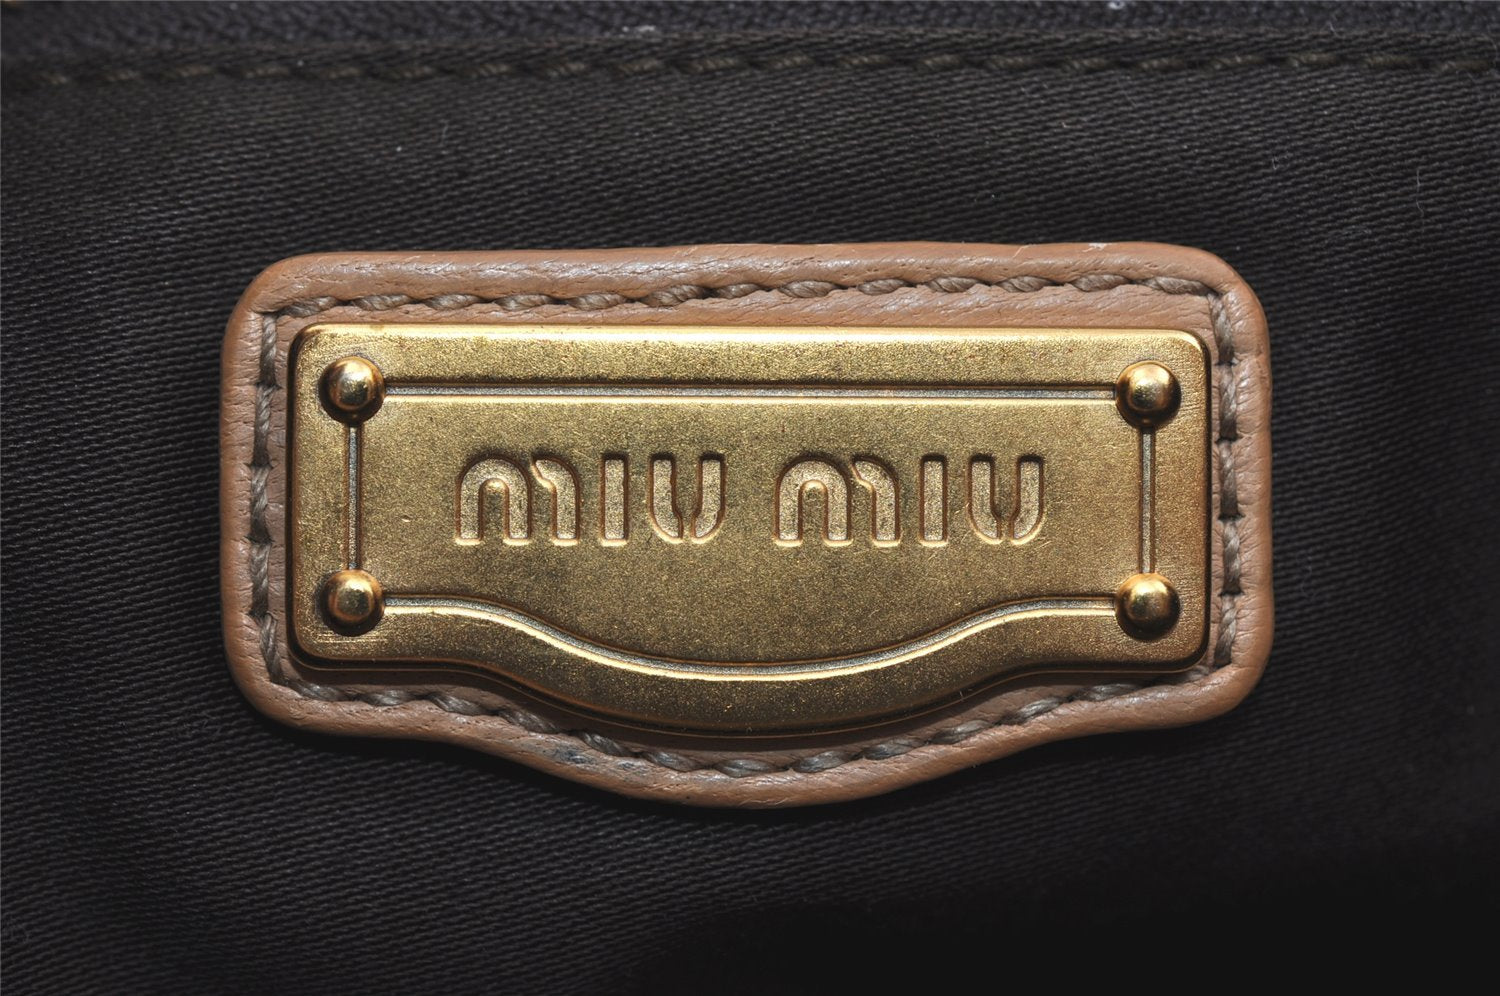 Authentic MIU MIU Matelasse Leather 2Way Shoulder Hand Bag Purse Beige 0976I